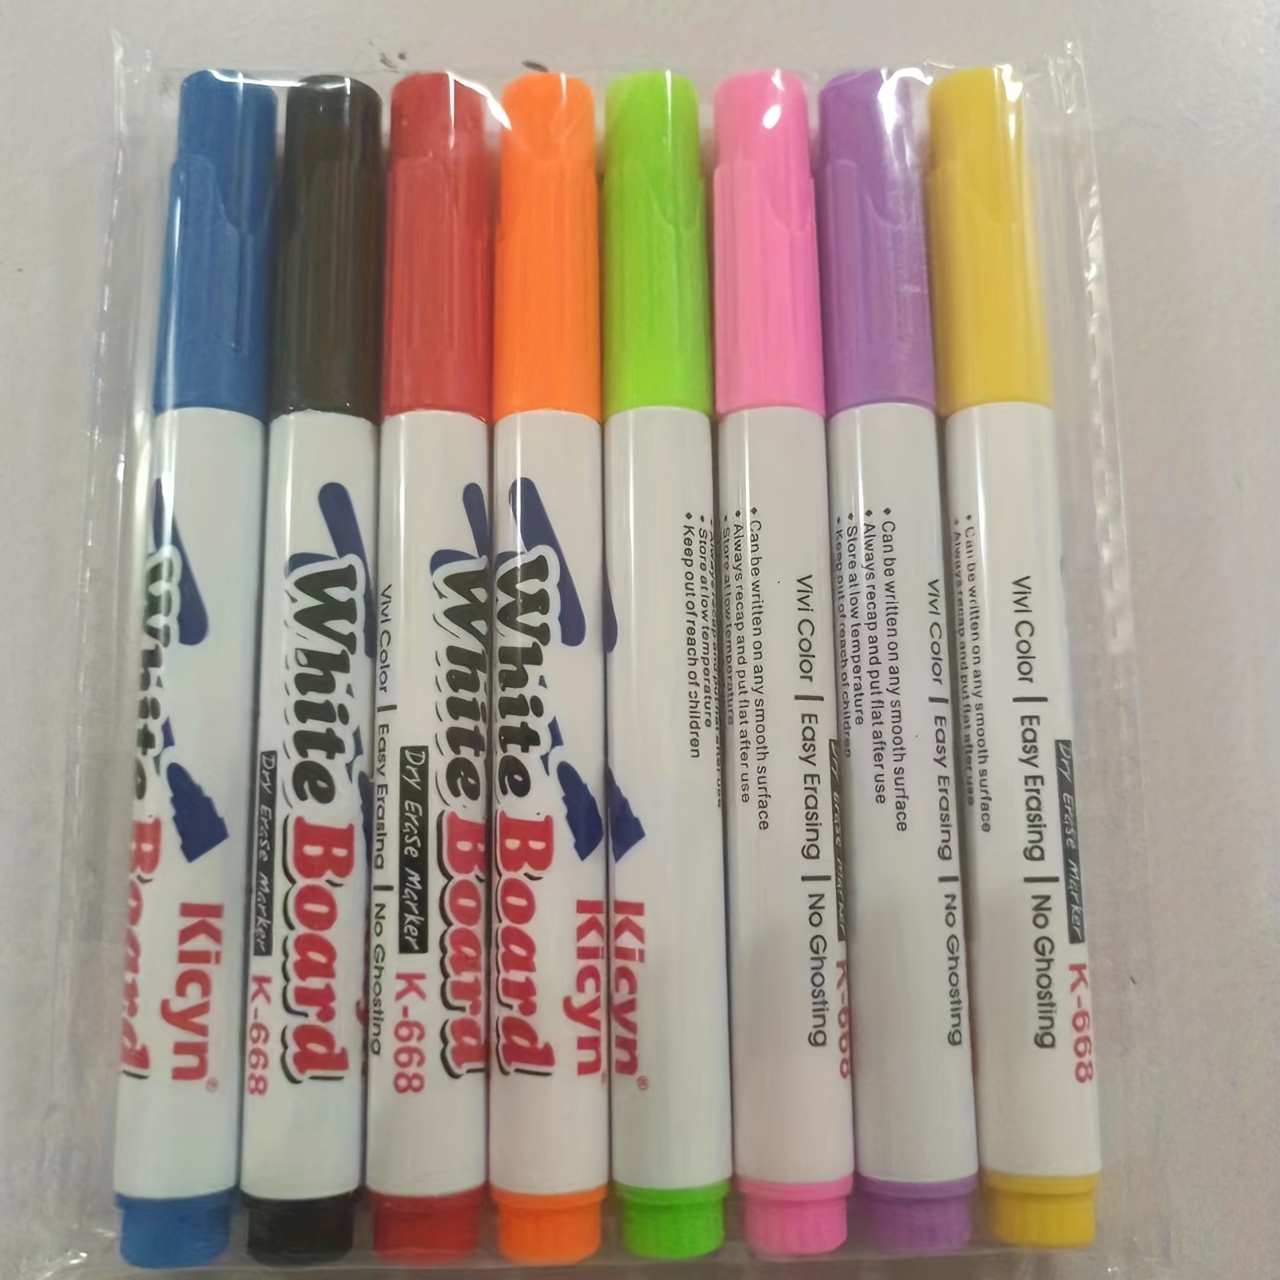 Magical Water Painting Pen Colorful Mark Pen Markers - Temu